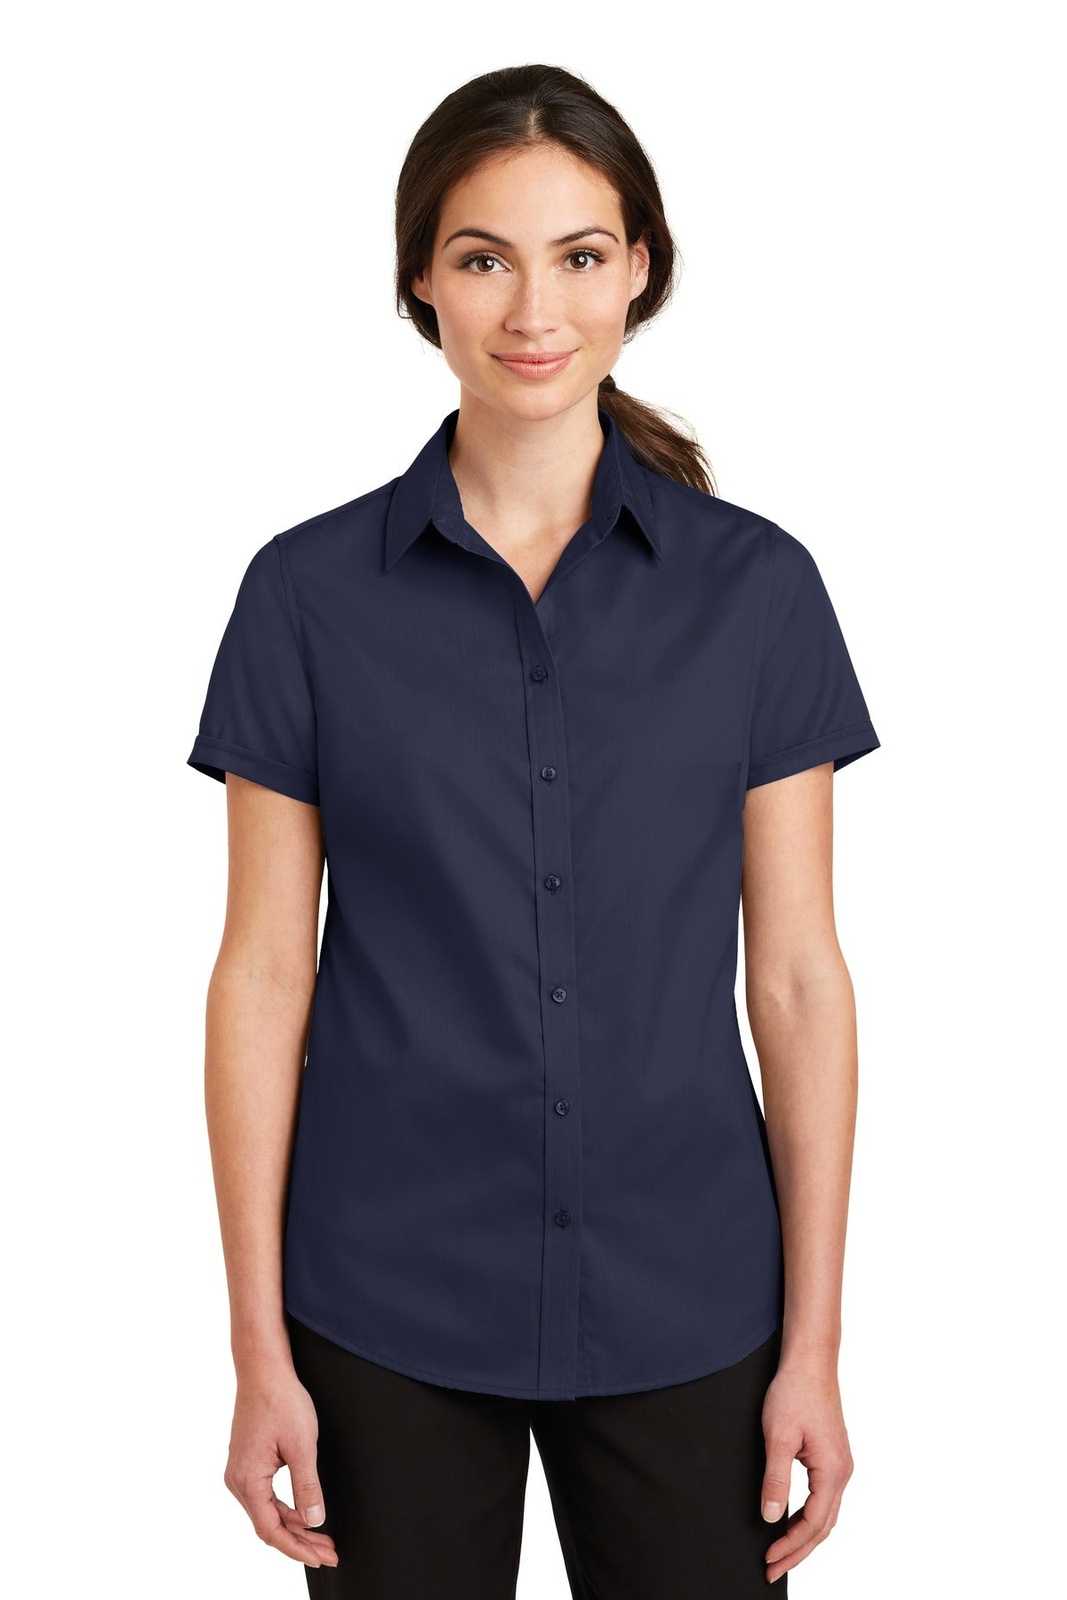 Port Authority L664 Ladies Short Sleeve Superpro Twill Shirt - True Navy - HIT a Double - 1